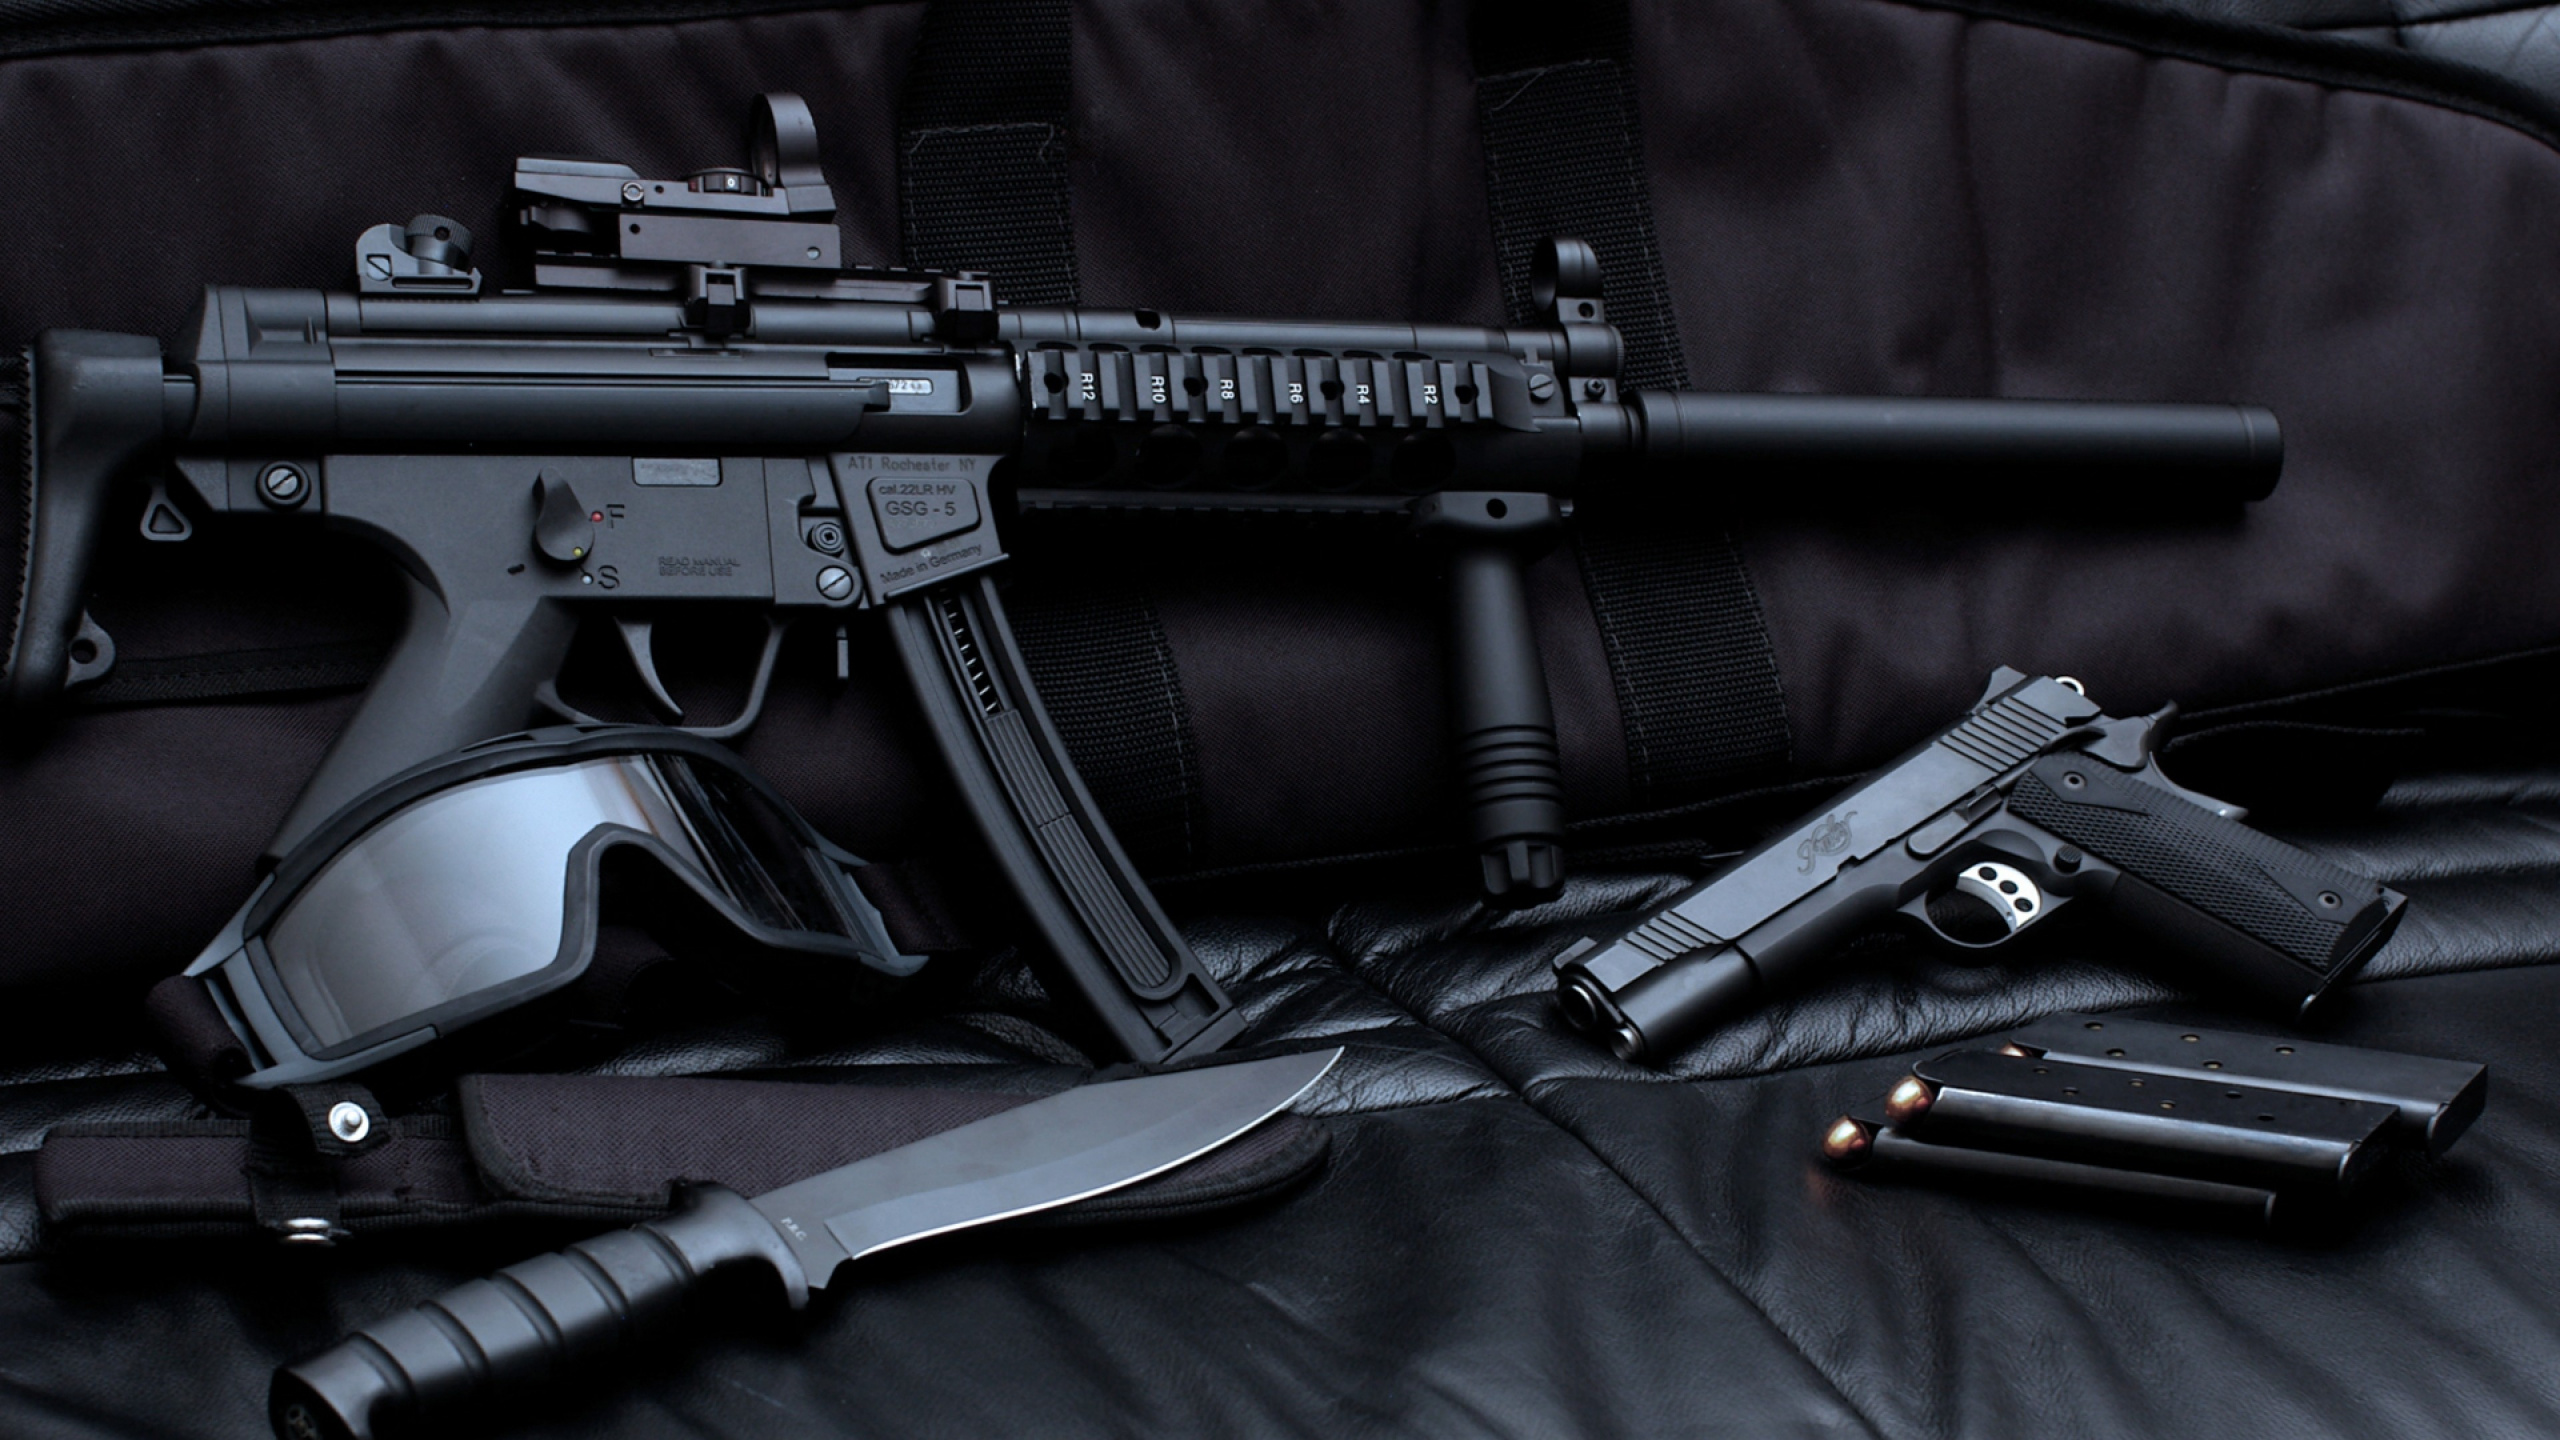 Maschinenpistole, Handfeuerwaffe, Feuerwaffe, Trigger, Gun Barrel. Wallpaper in 2560x1440 Resolution